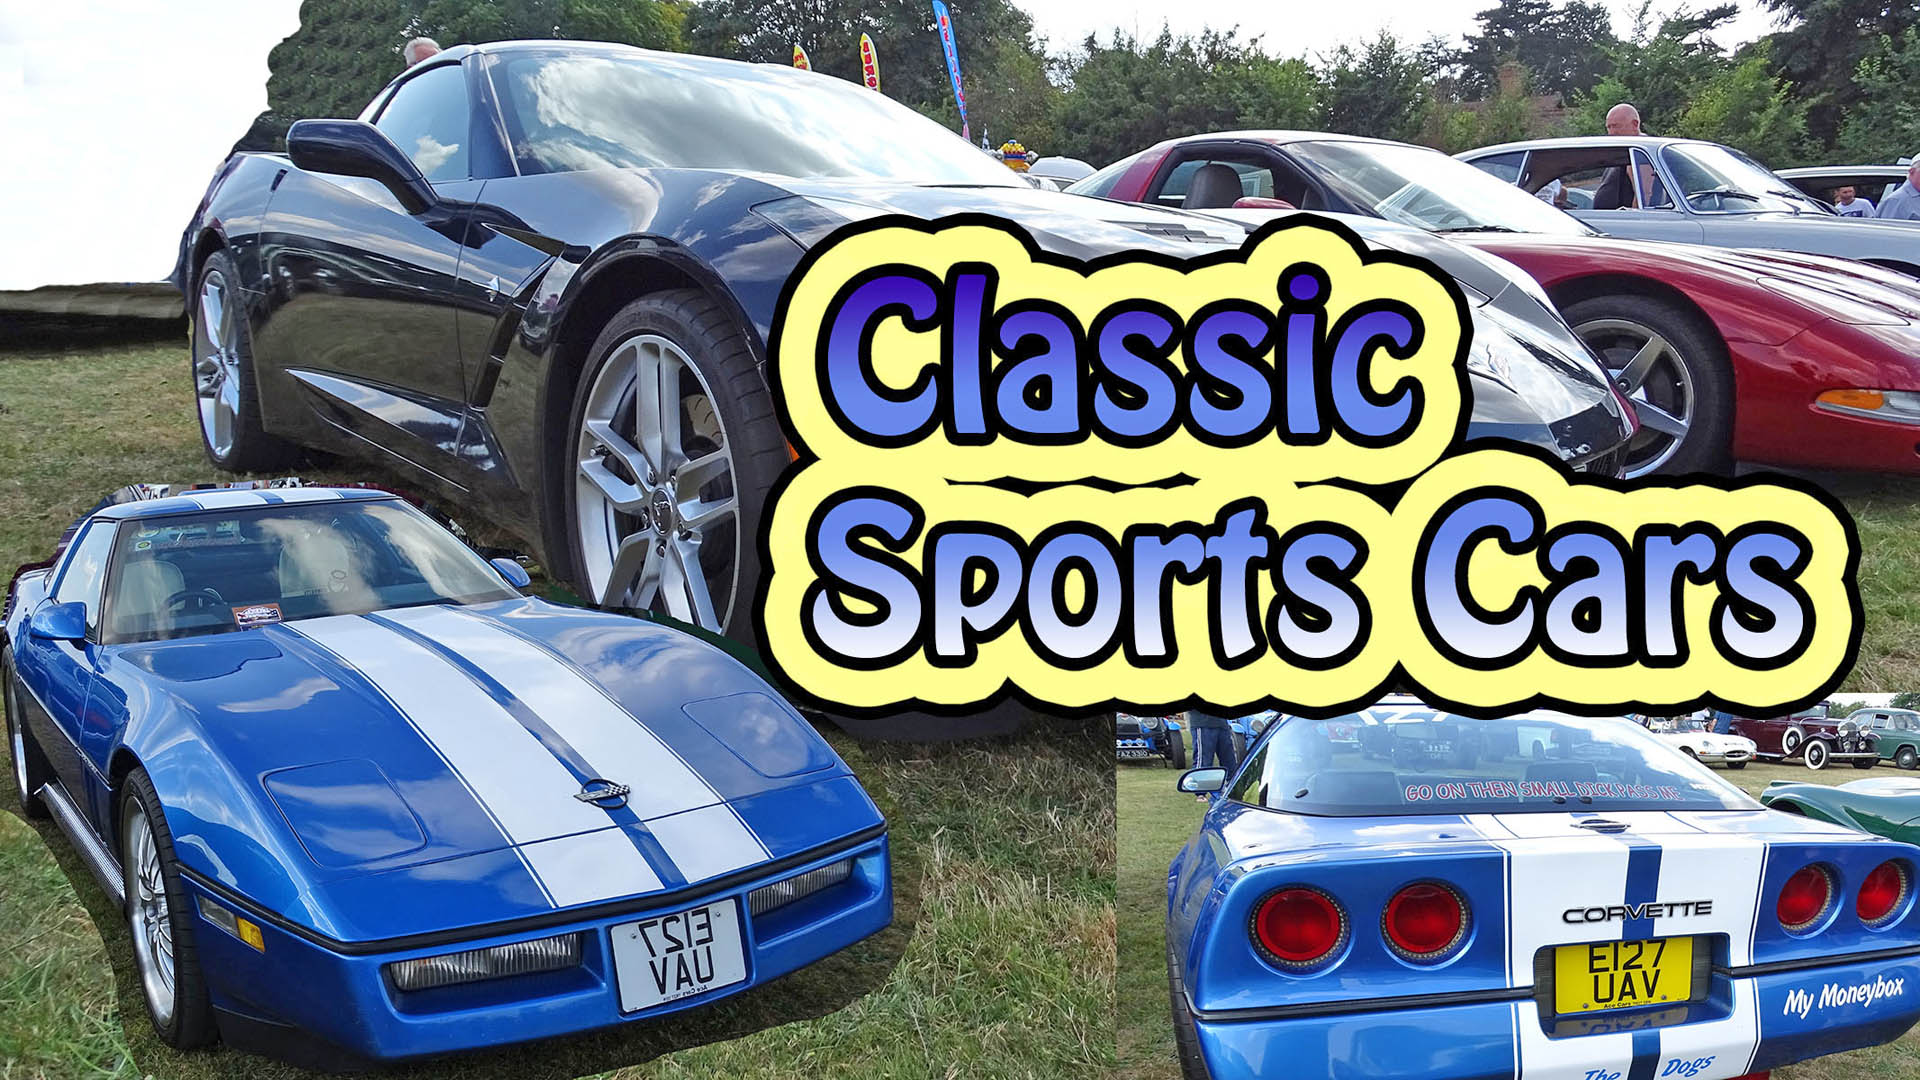 American Corvette's Mustang's Super Classic Sports Cars at Croxley Green Car Show